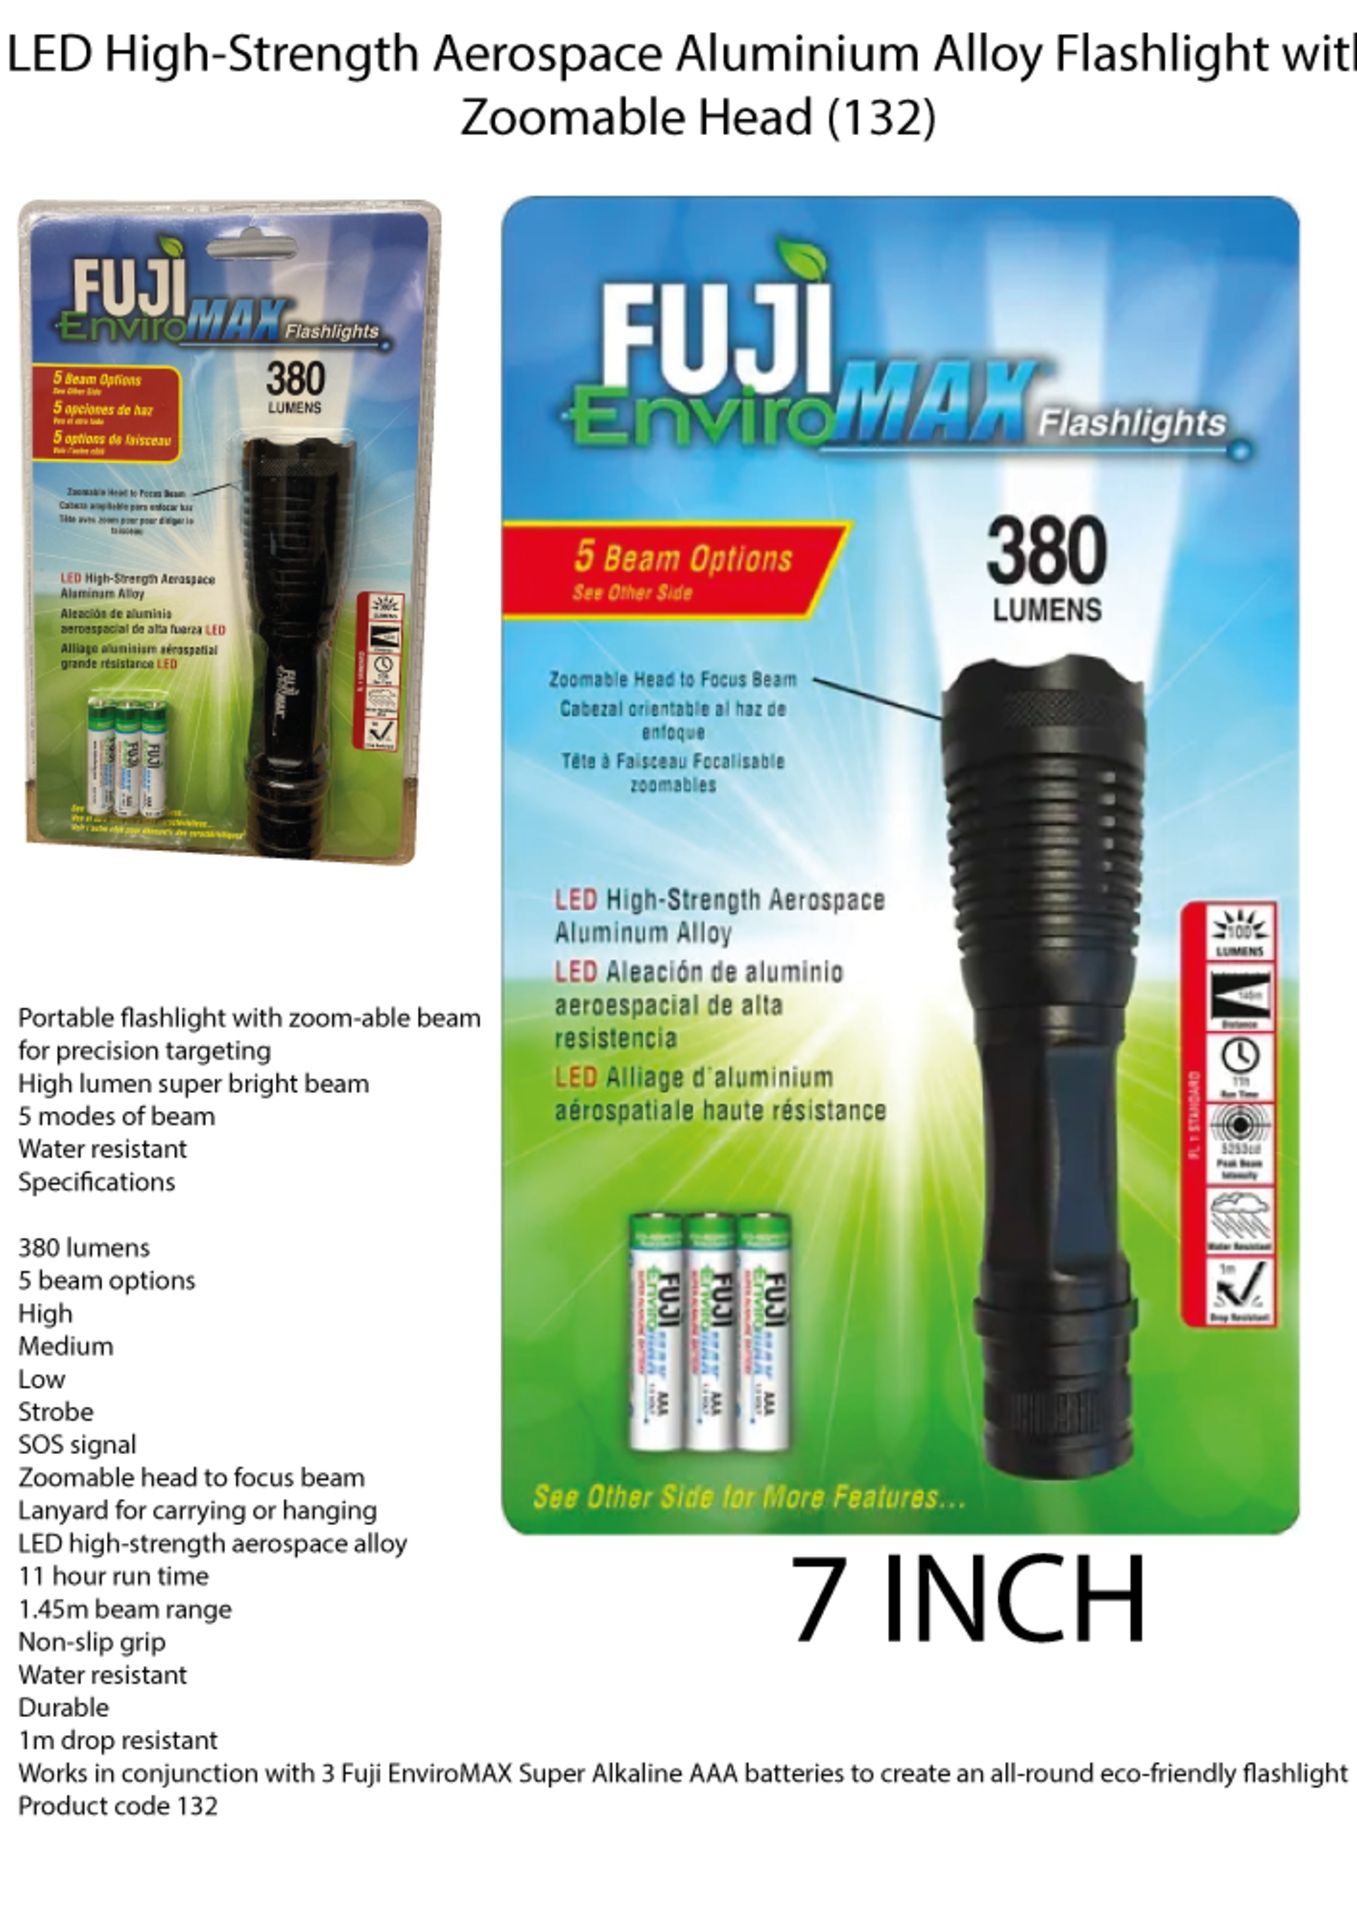 6 x Fuji EnviroMax 380 Lumens LED Flashlight - Image 2 of 2